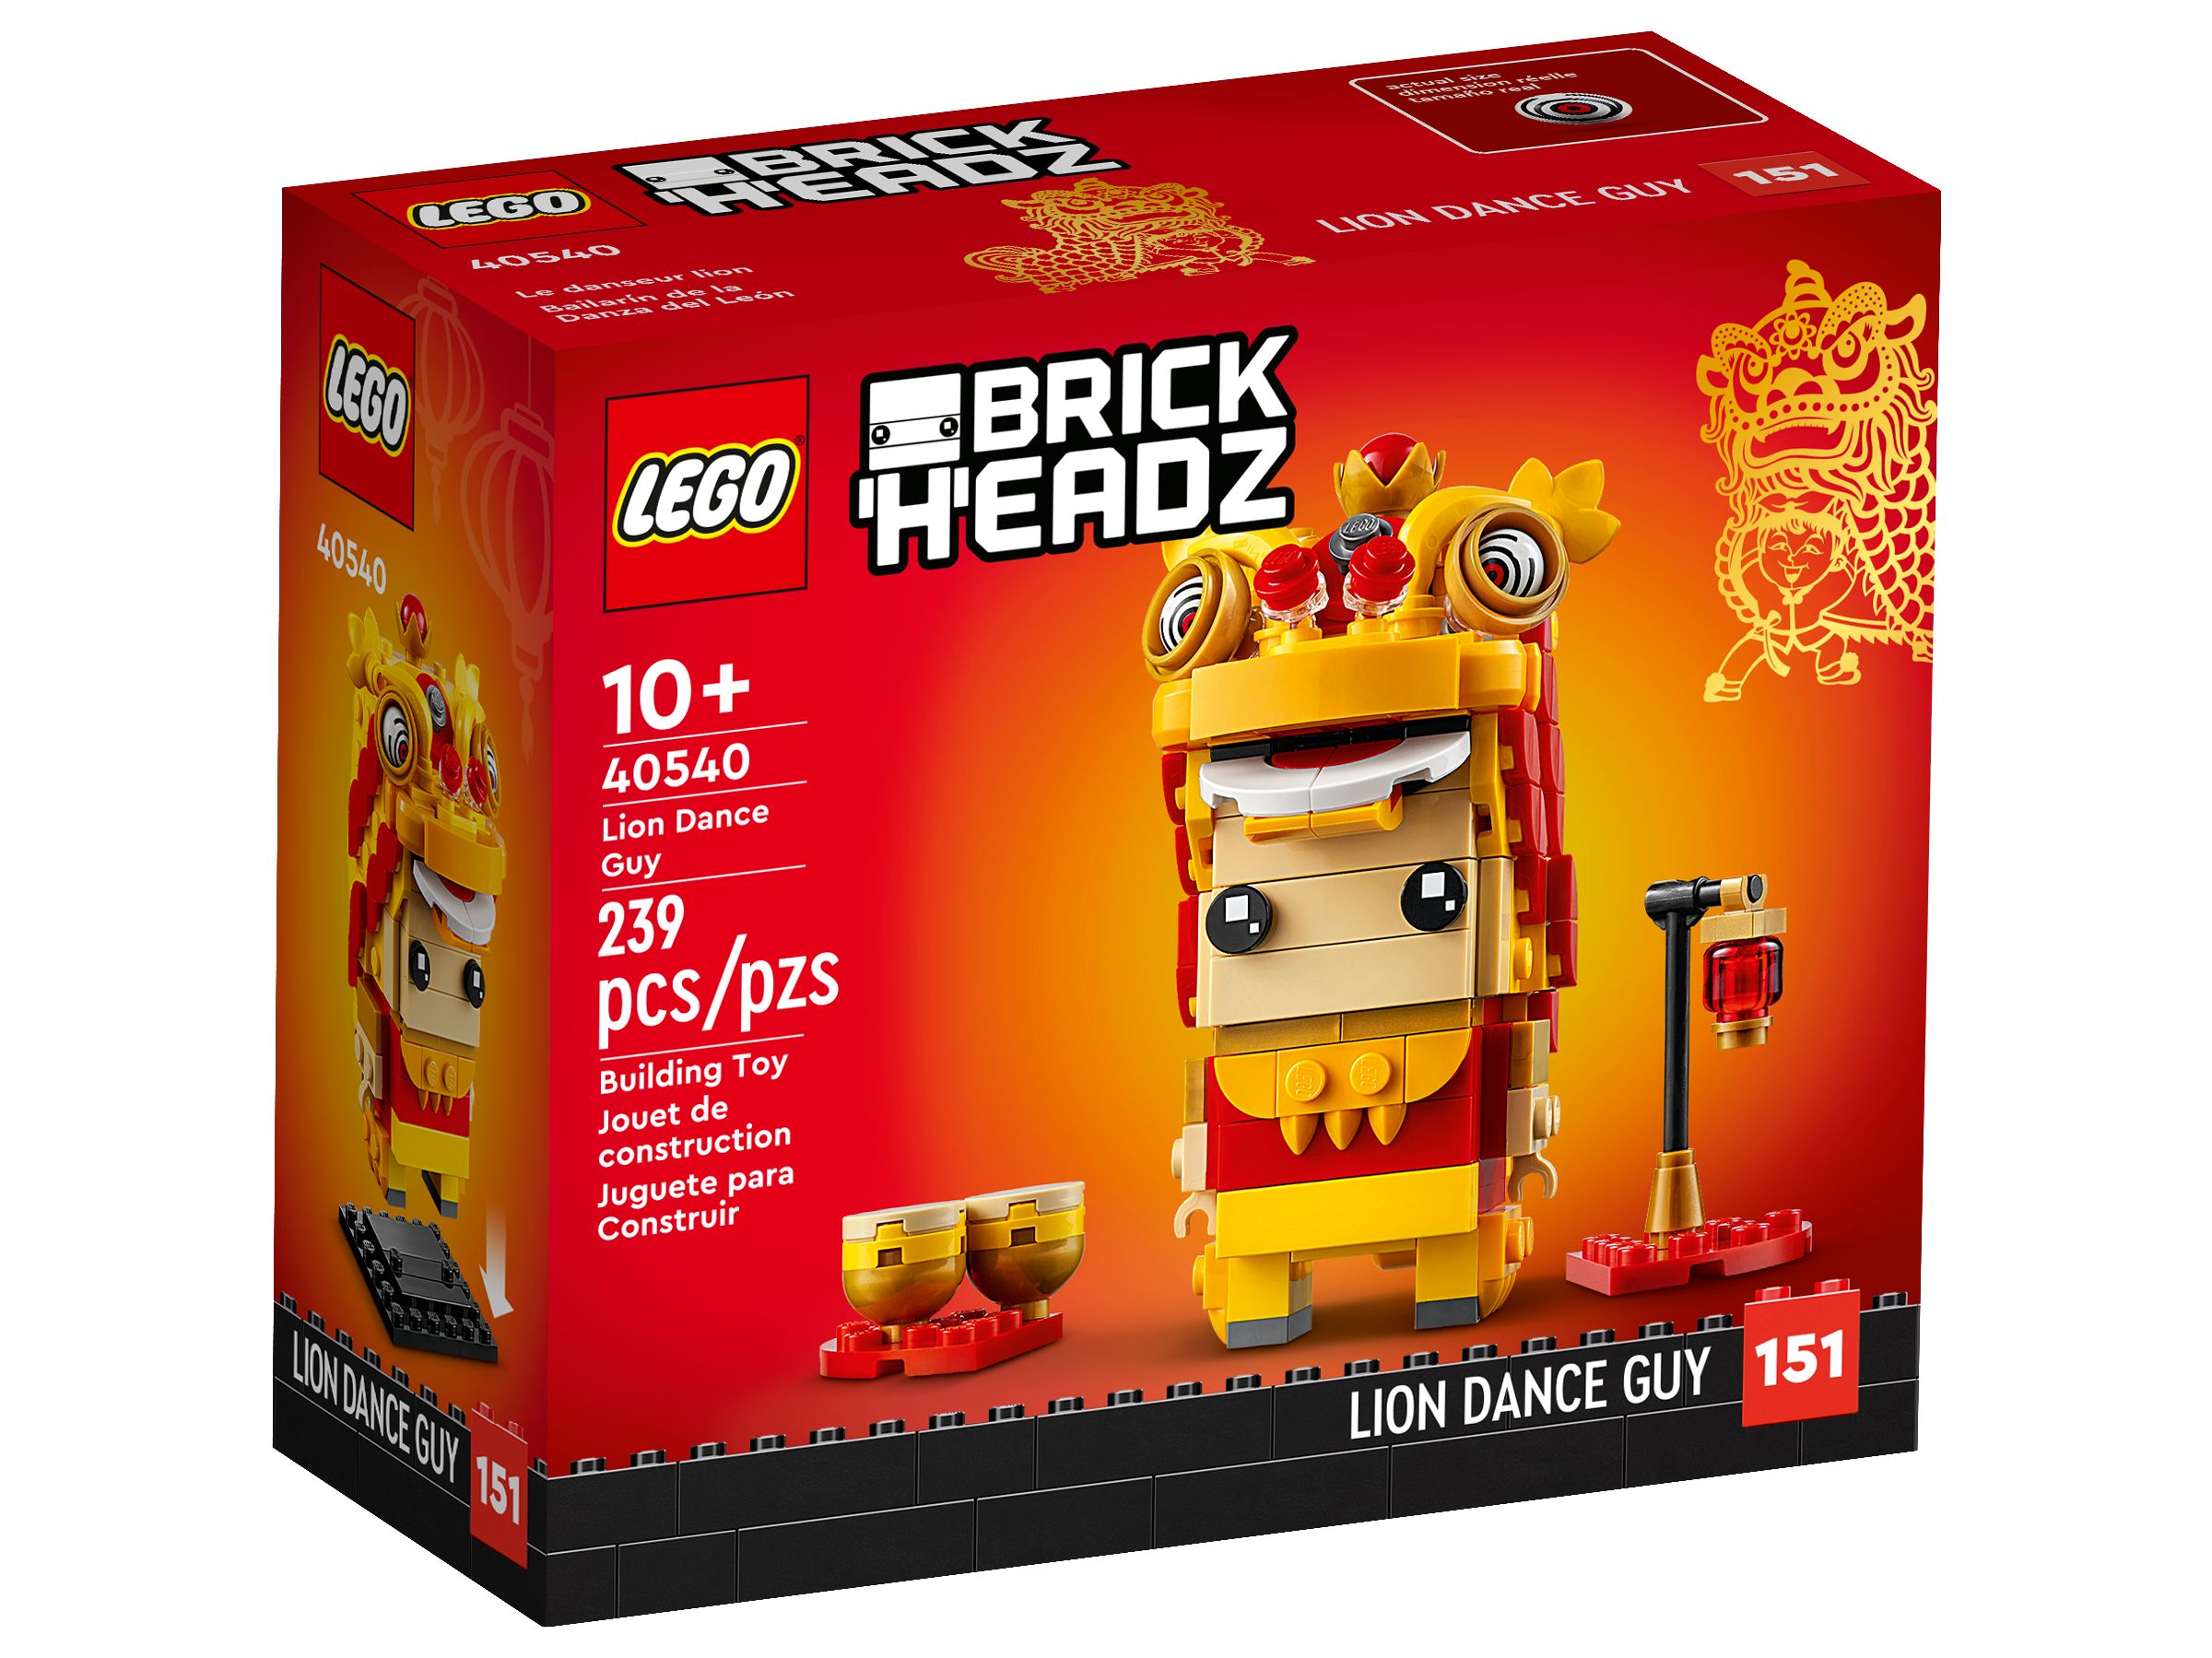 LEGO BrickHeadz 40540 Löwentänzer LEGO_40540_alt1.jpg